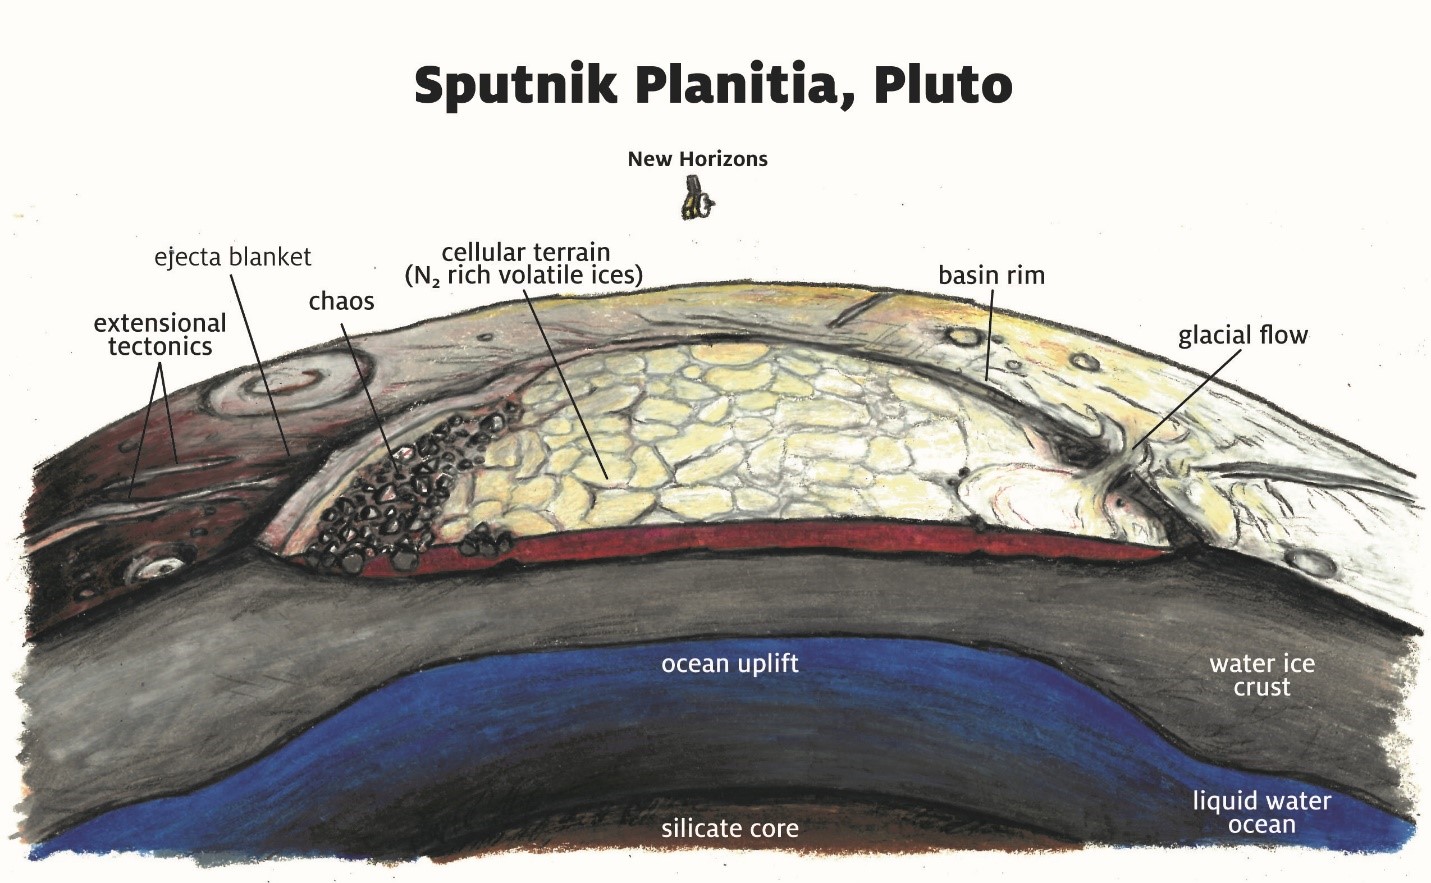 Illustration of Sputnik Planitia at Pluto